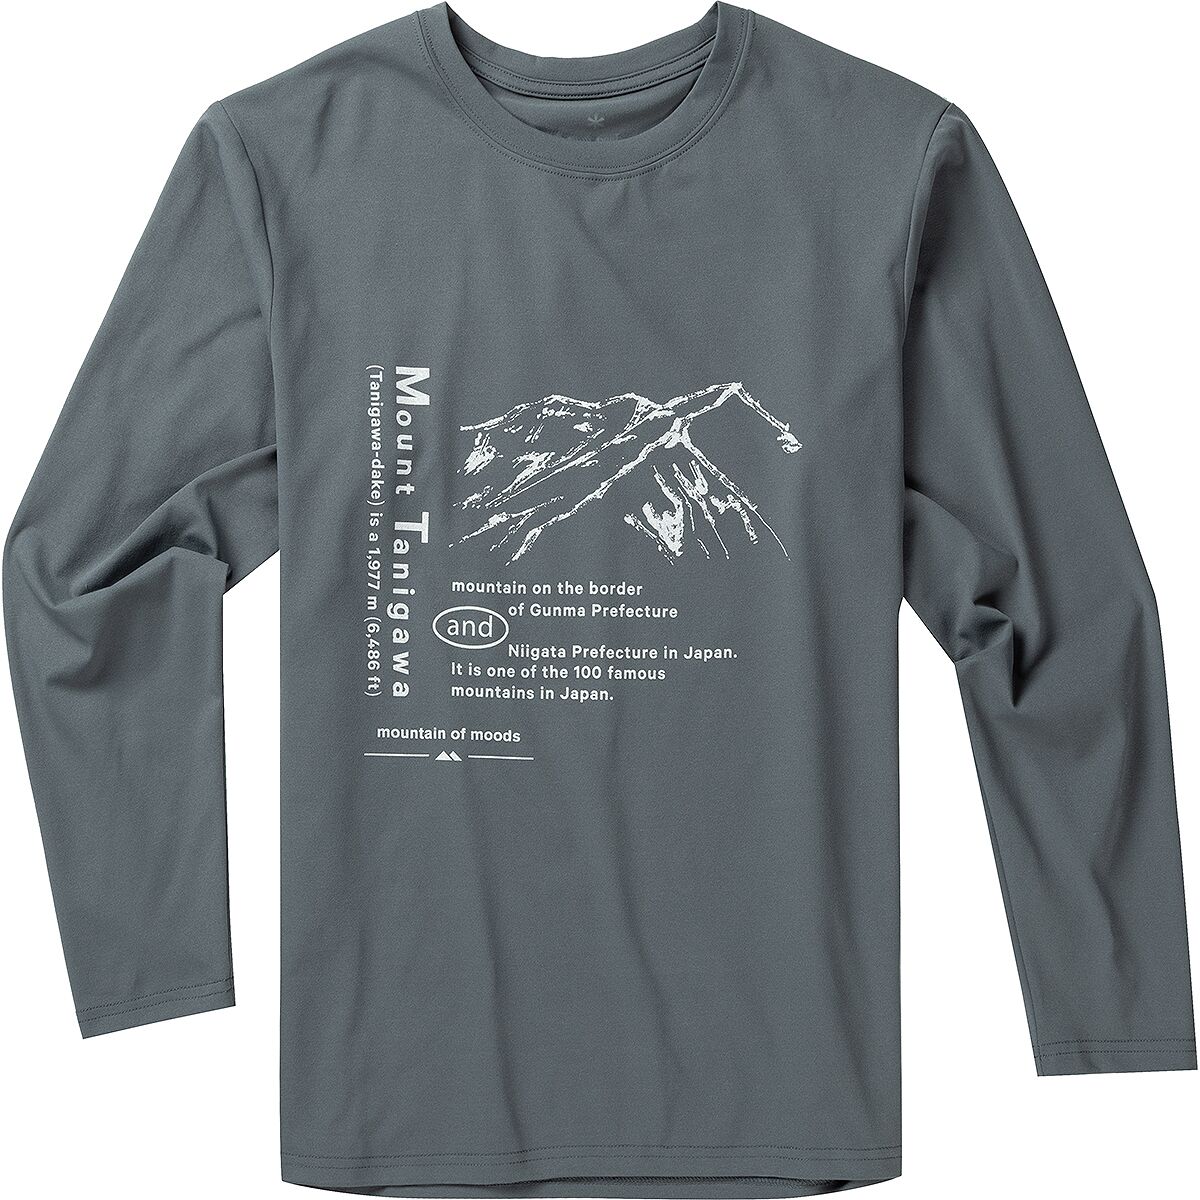 Snow Peak Mt.Tanigawa Long-Sleeve T-Shirt - Men's